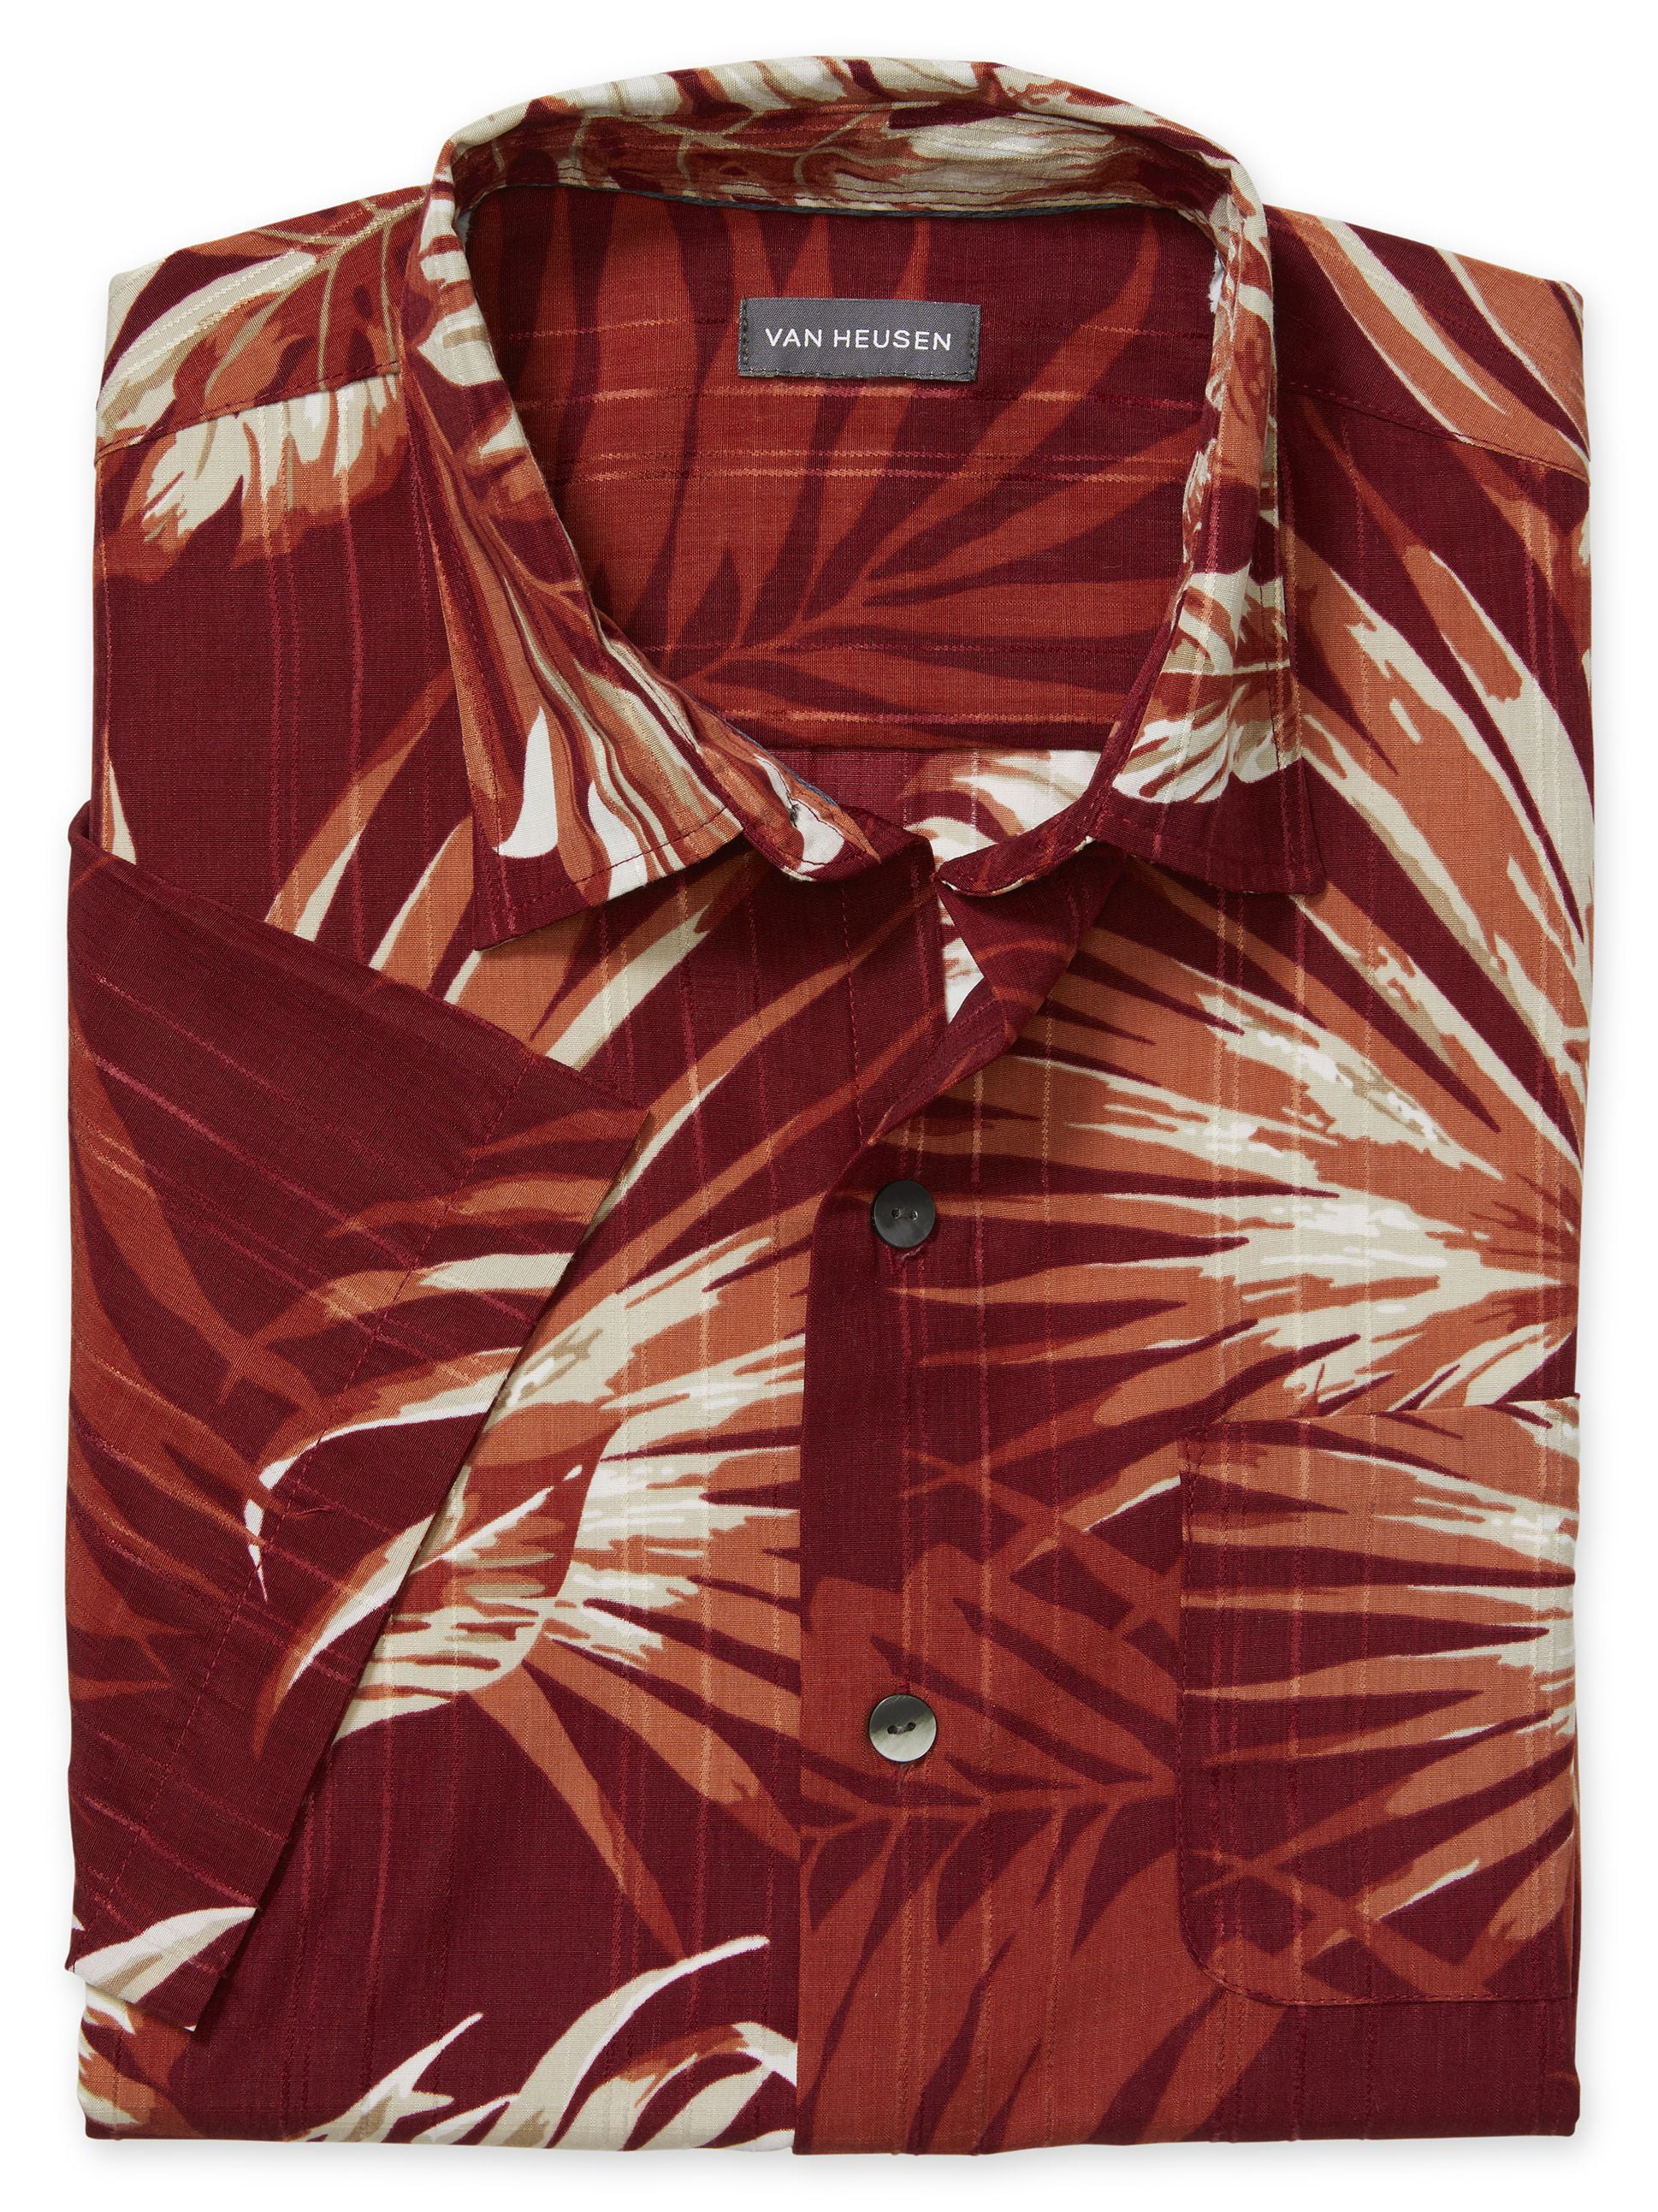 Van Heusen Men's Air Tropical Print Short Sleeve Button Down Shirt